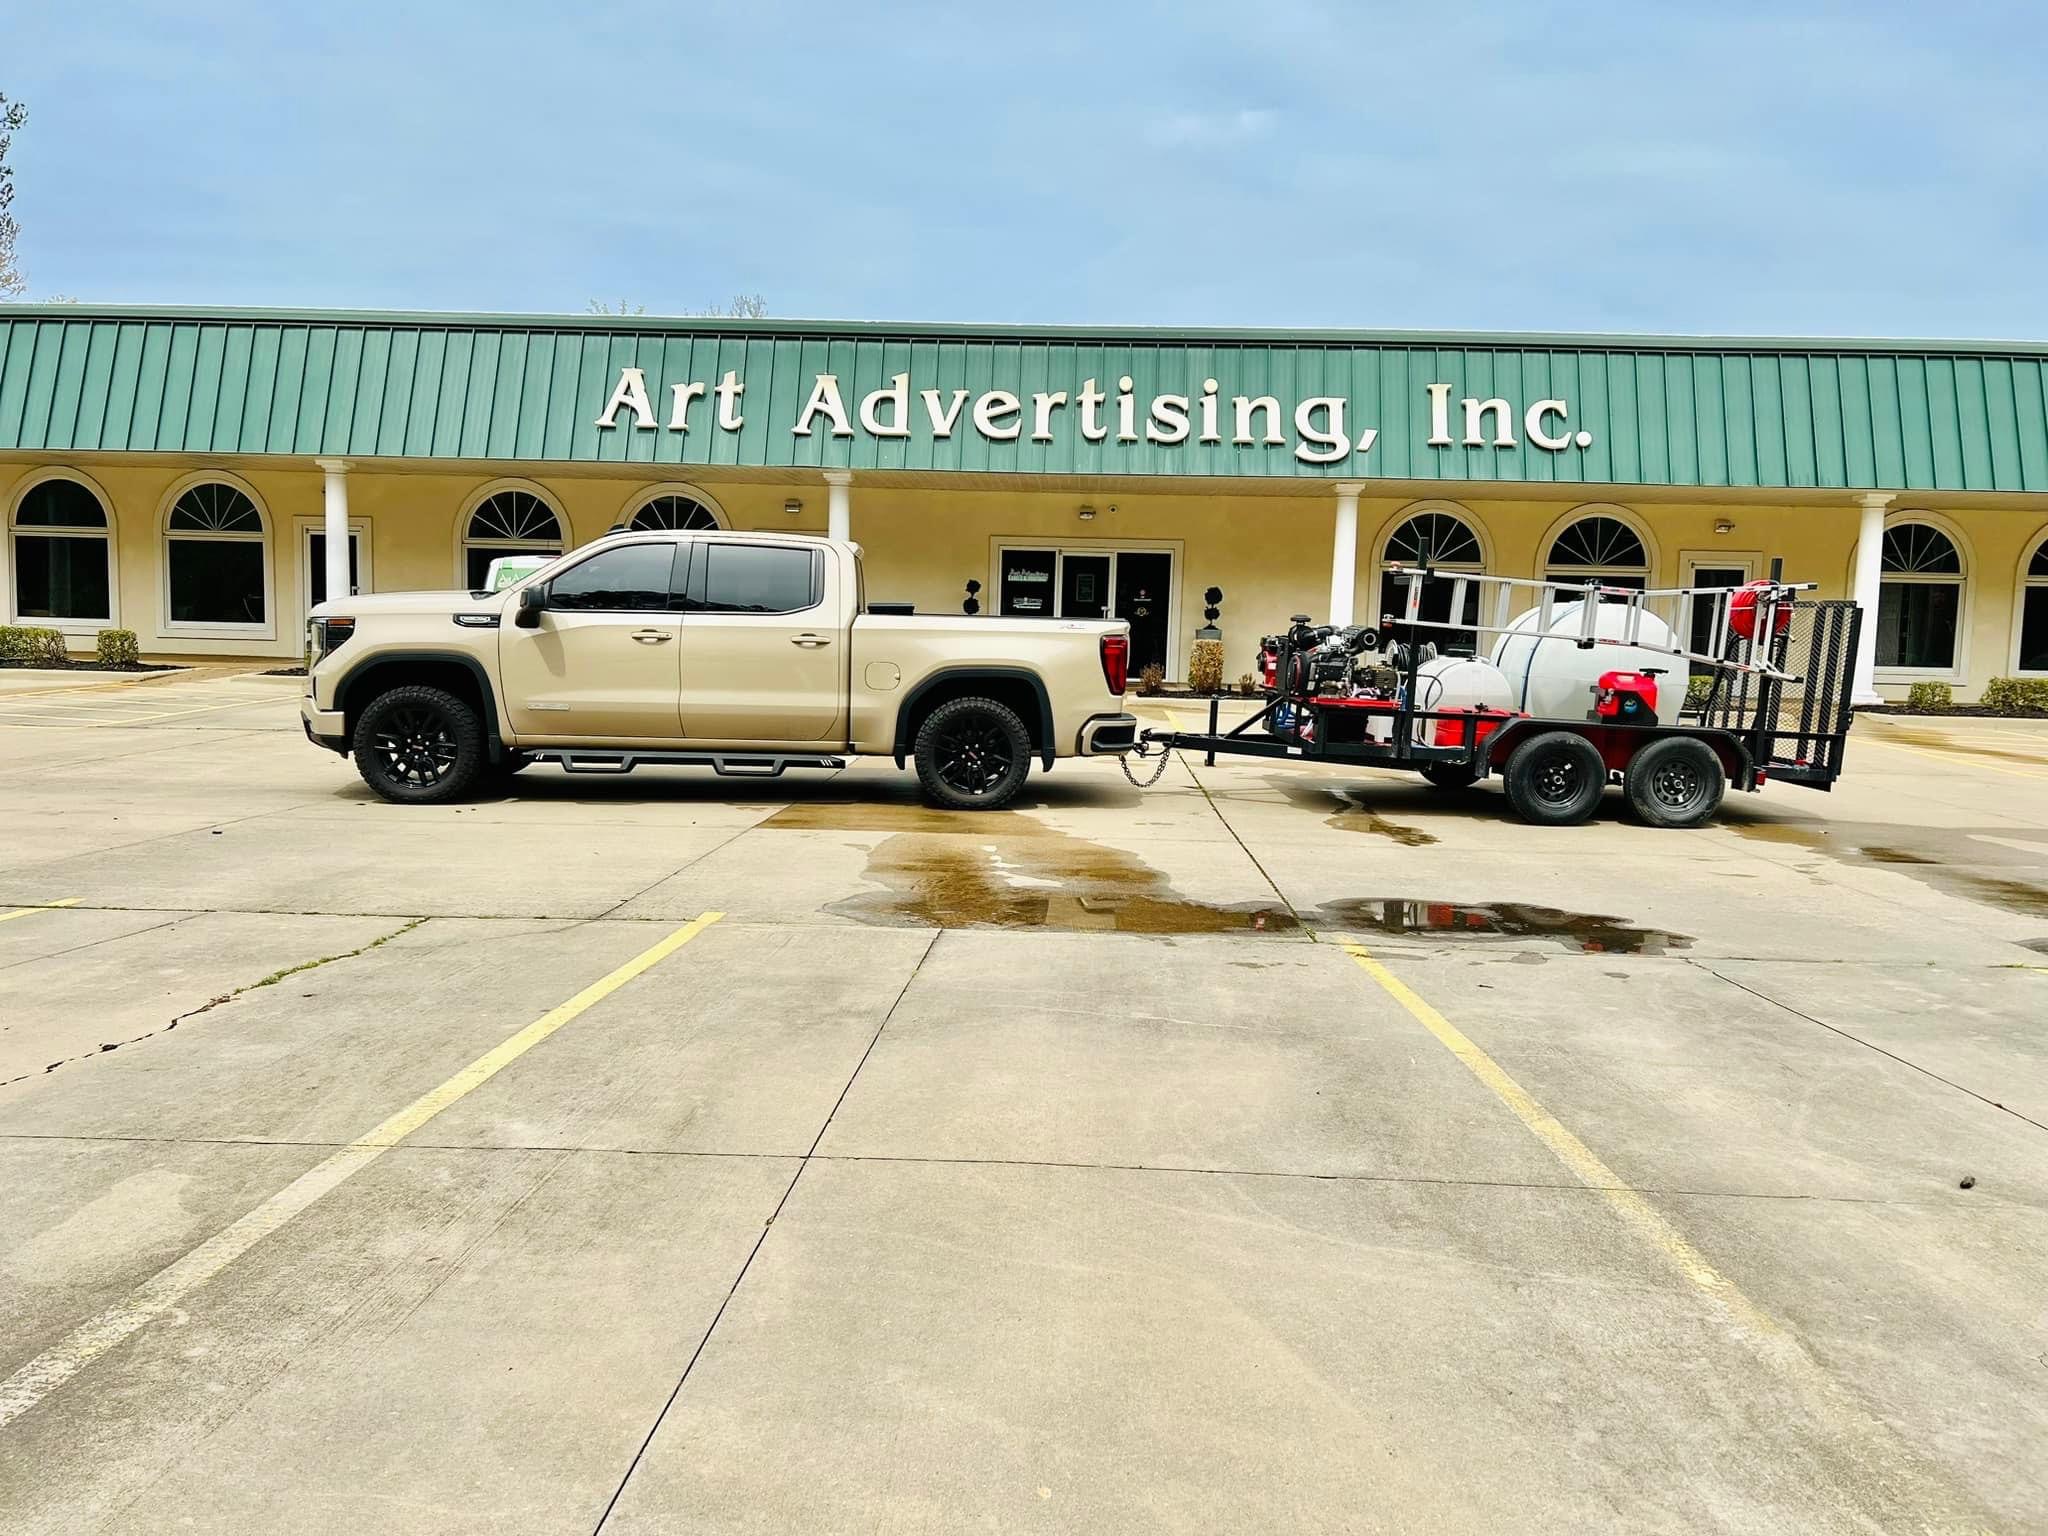 Jonesboro's Art Advertising cleaned up!